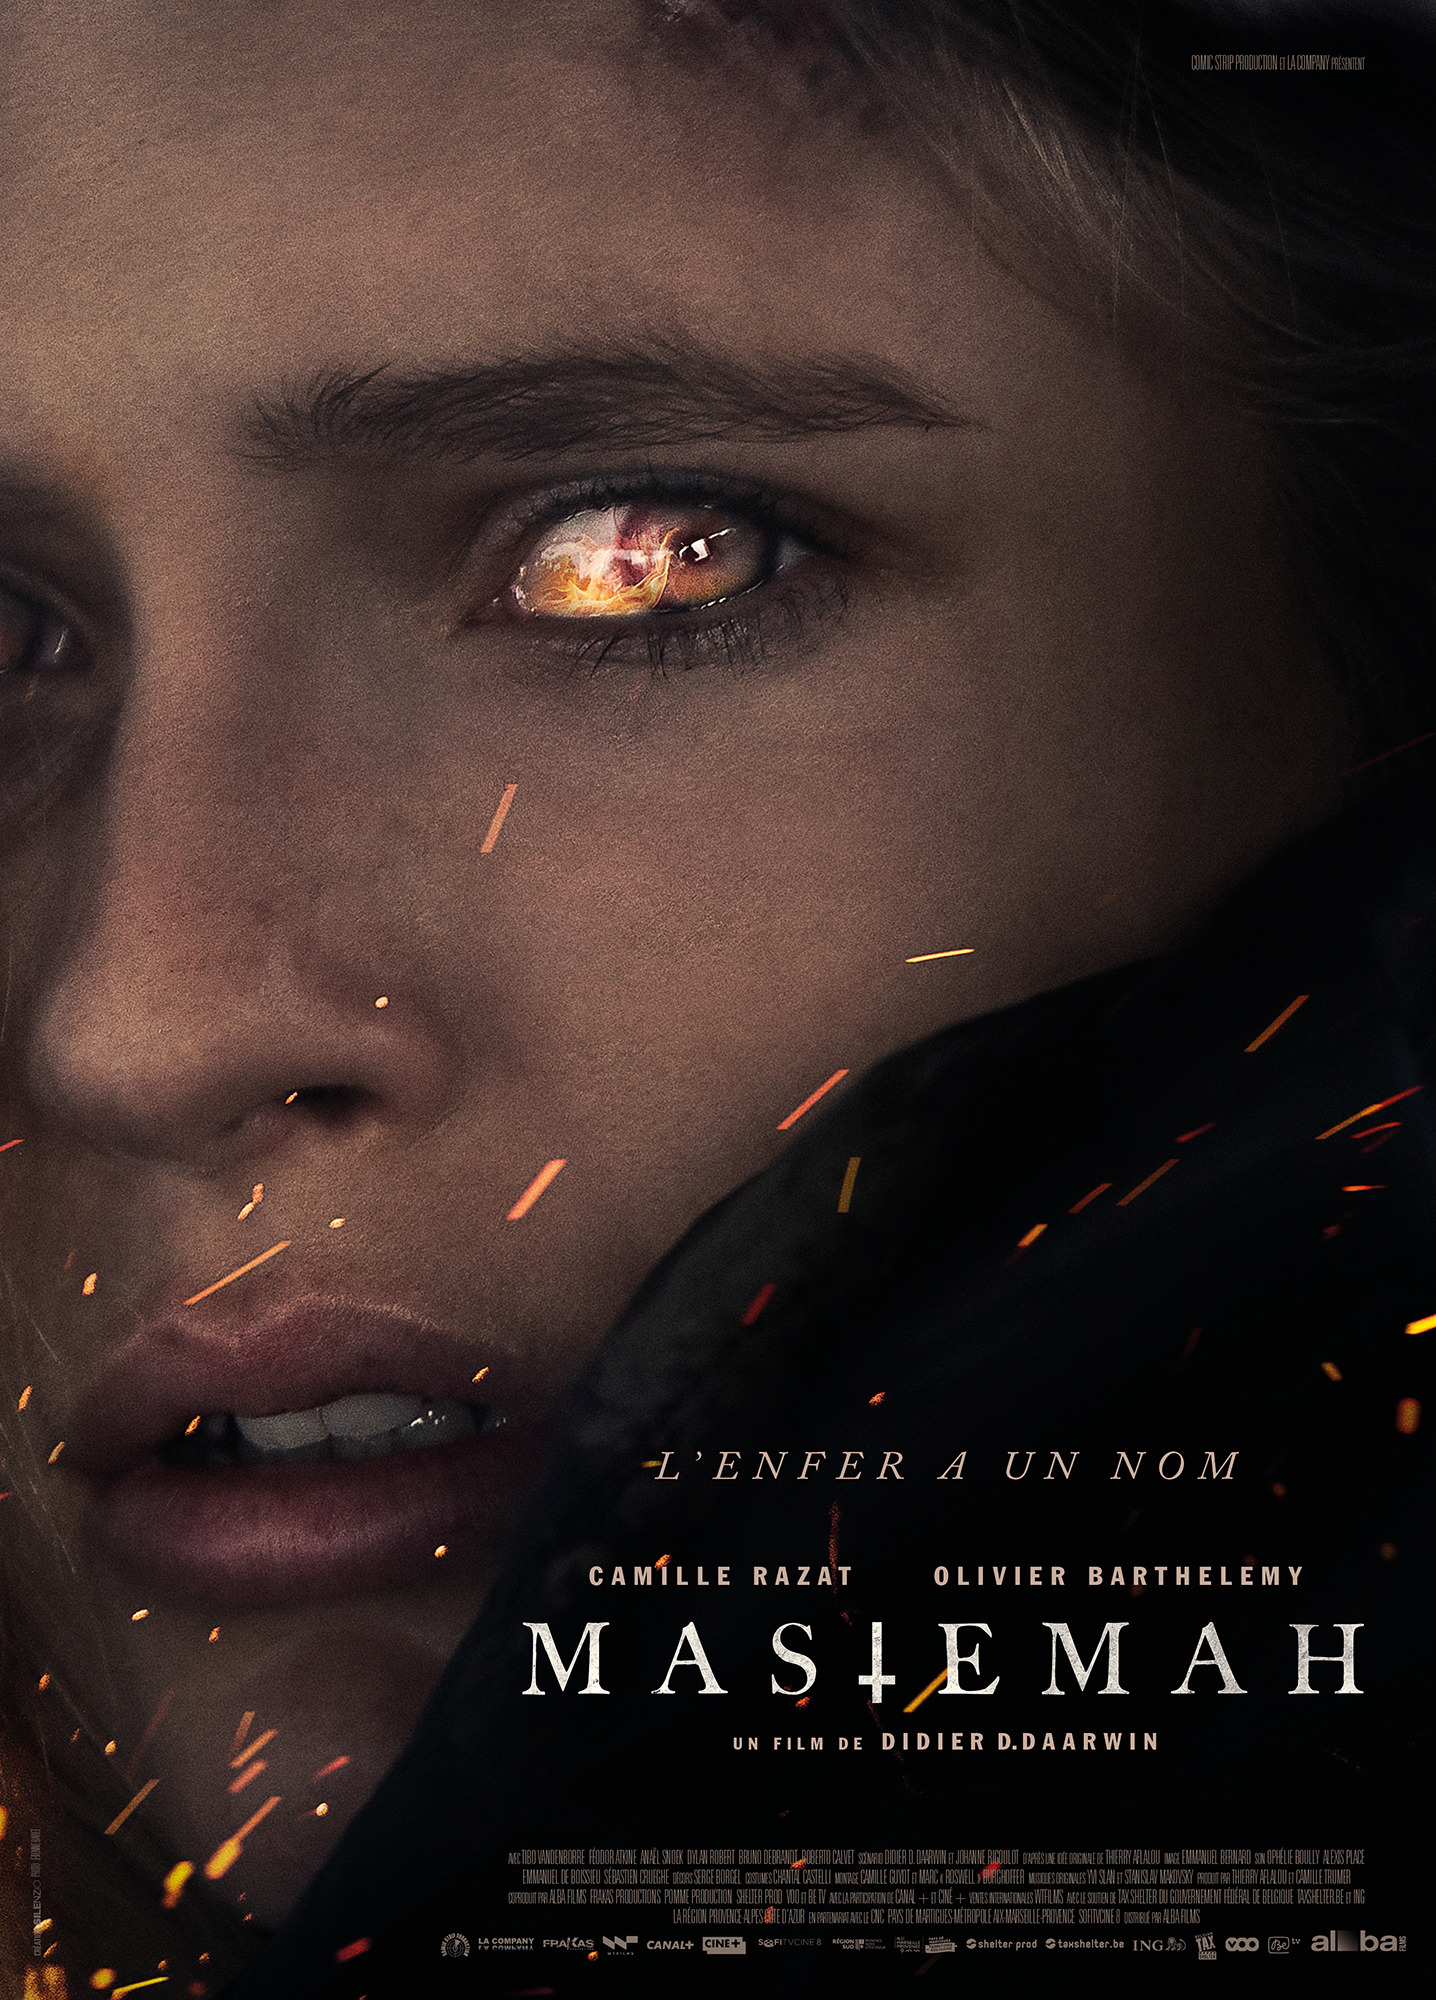 Mega Sized Movie Poster Image for Mastemah 